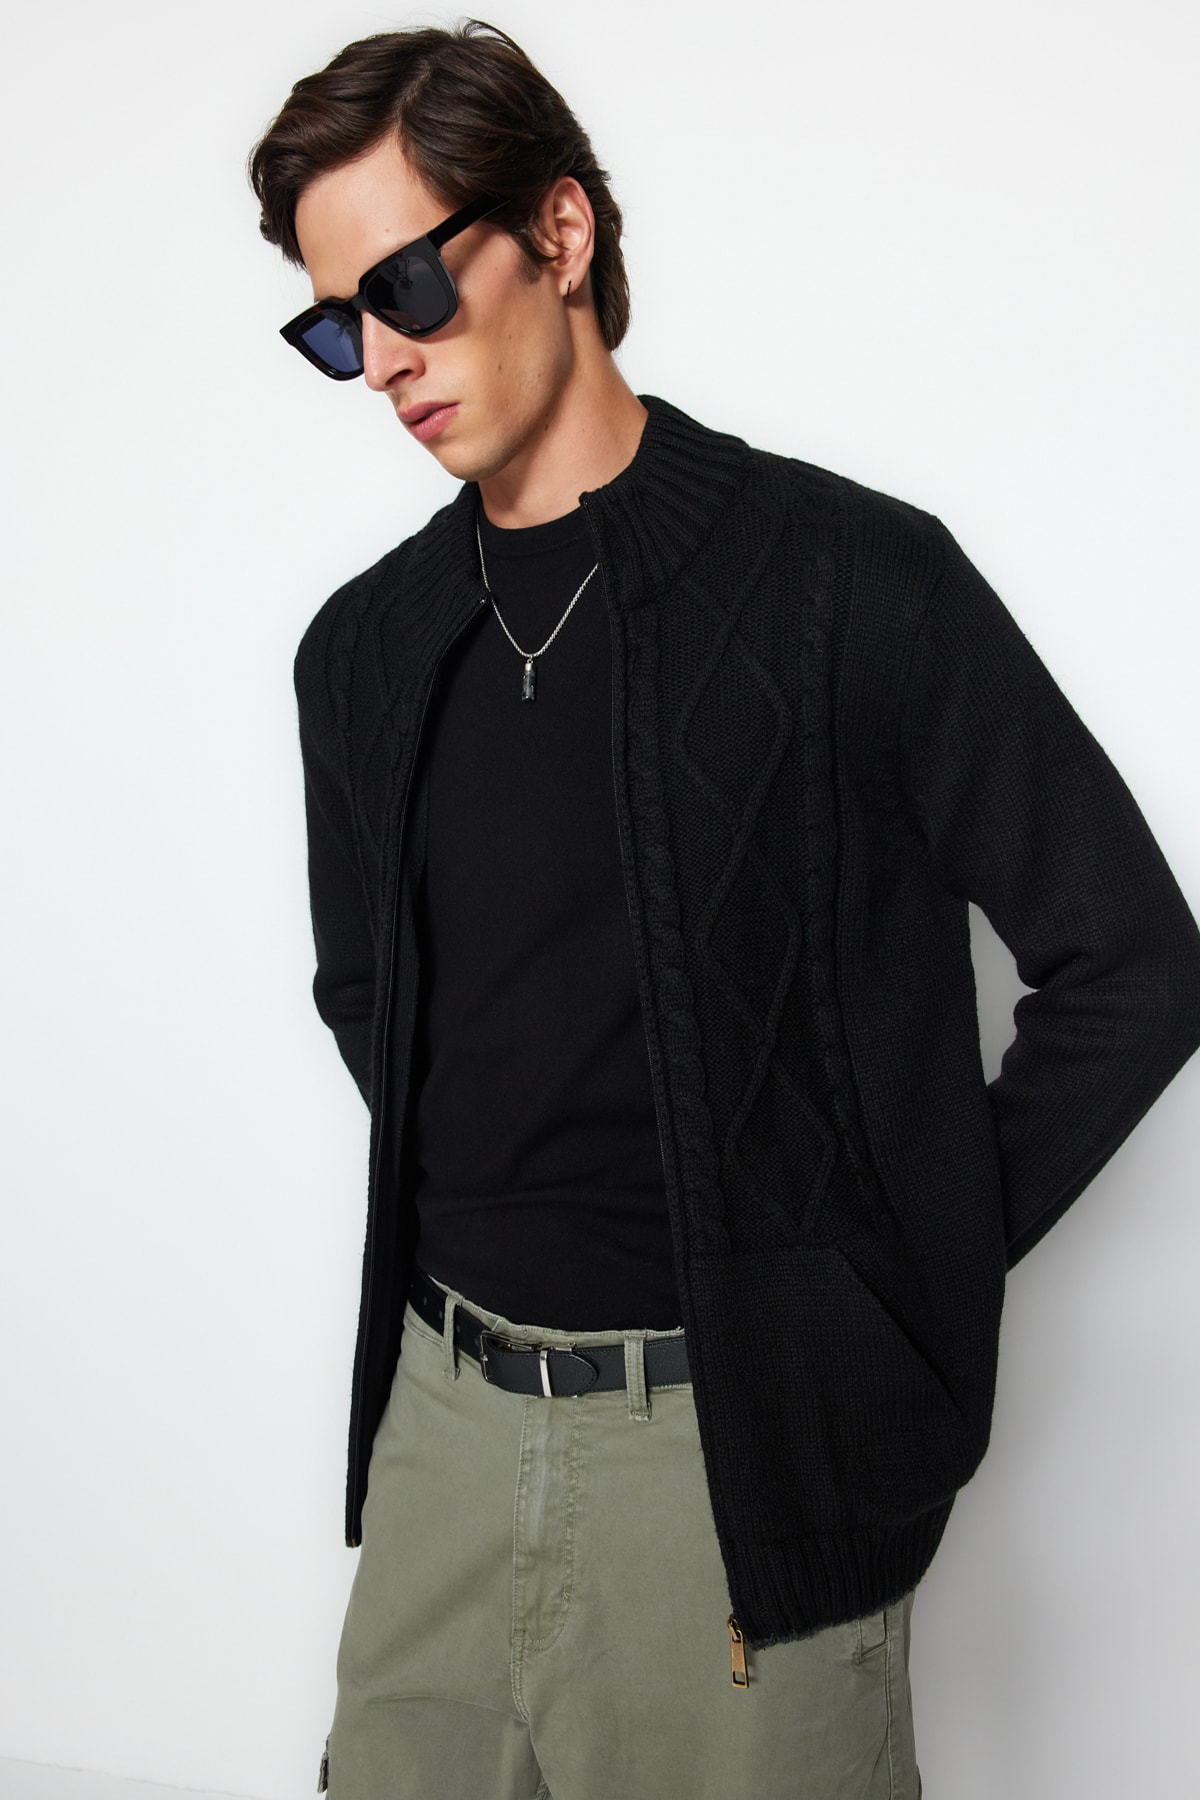 Trendyol Black Slim Fit Knitted Detailed Zippered Pocket Knitwear Cardigan